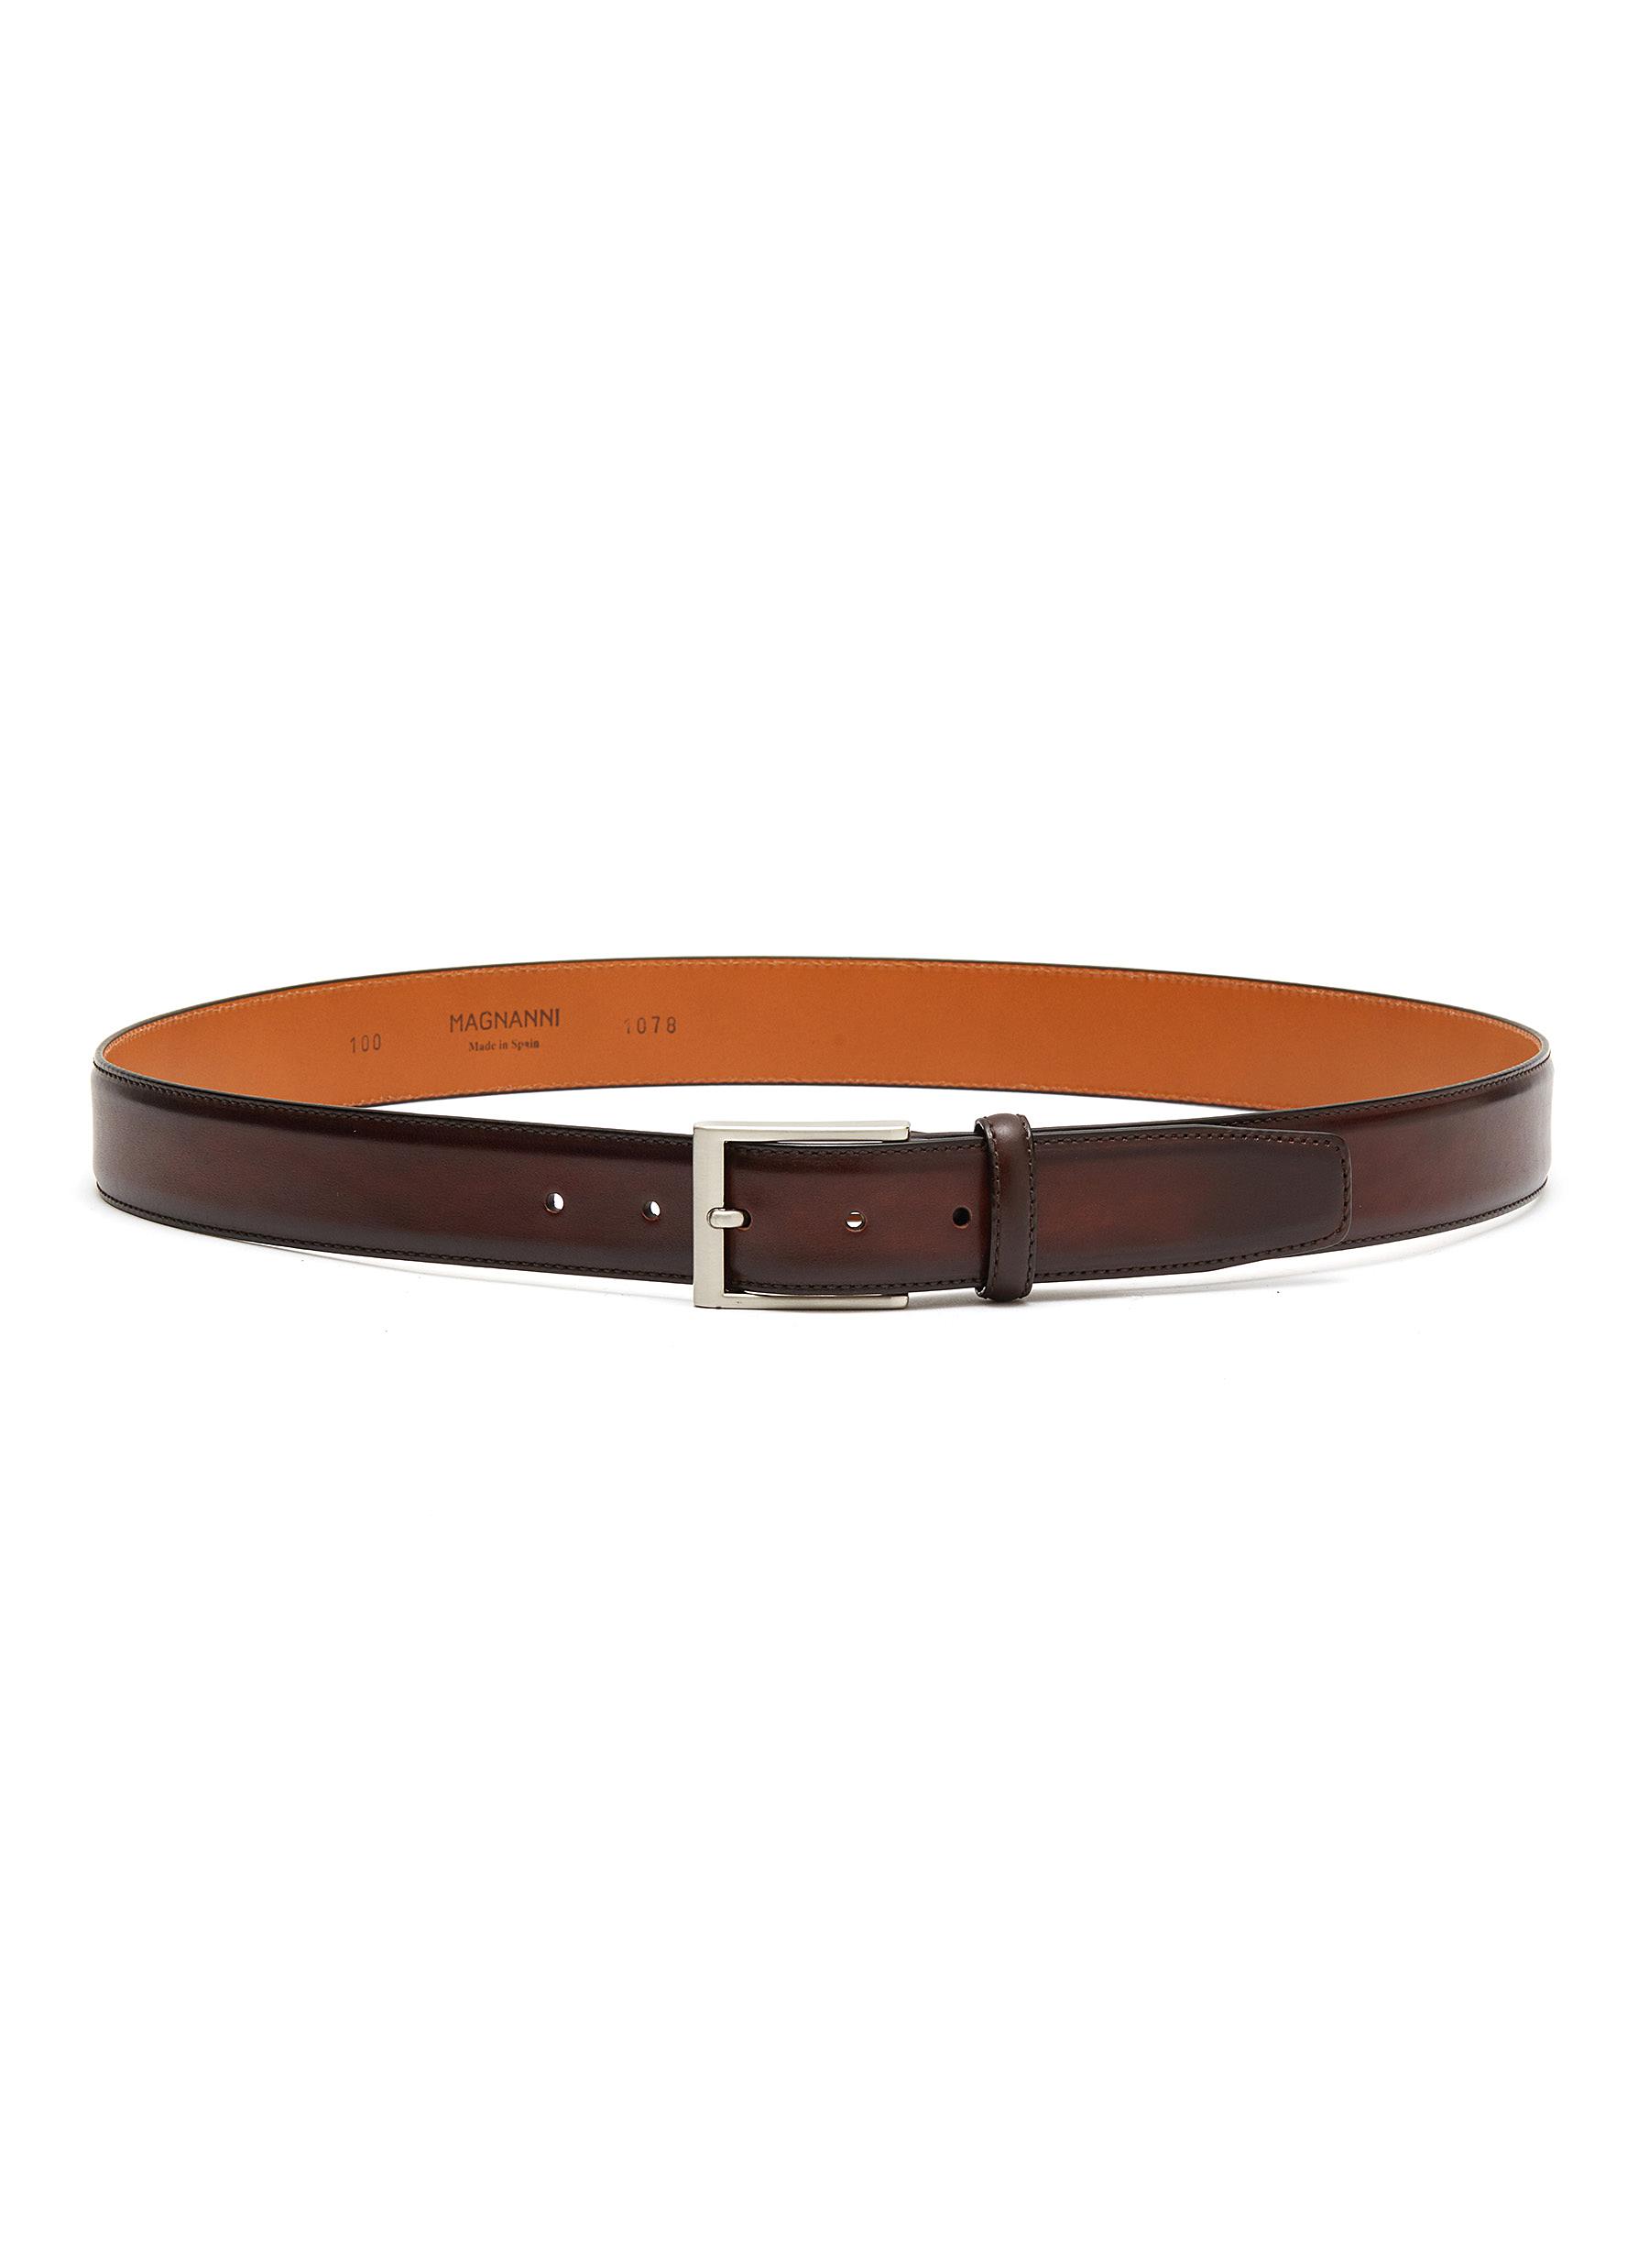 MAGNANNI Leather Belt